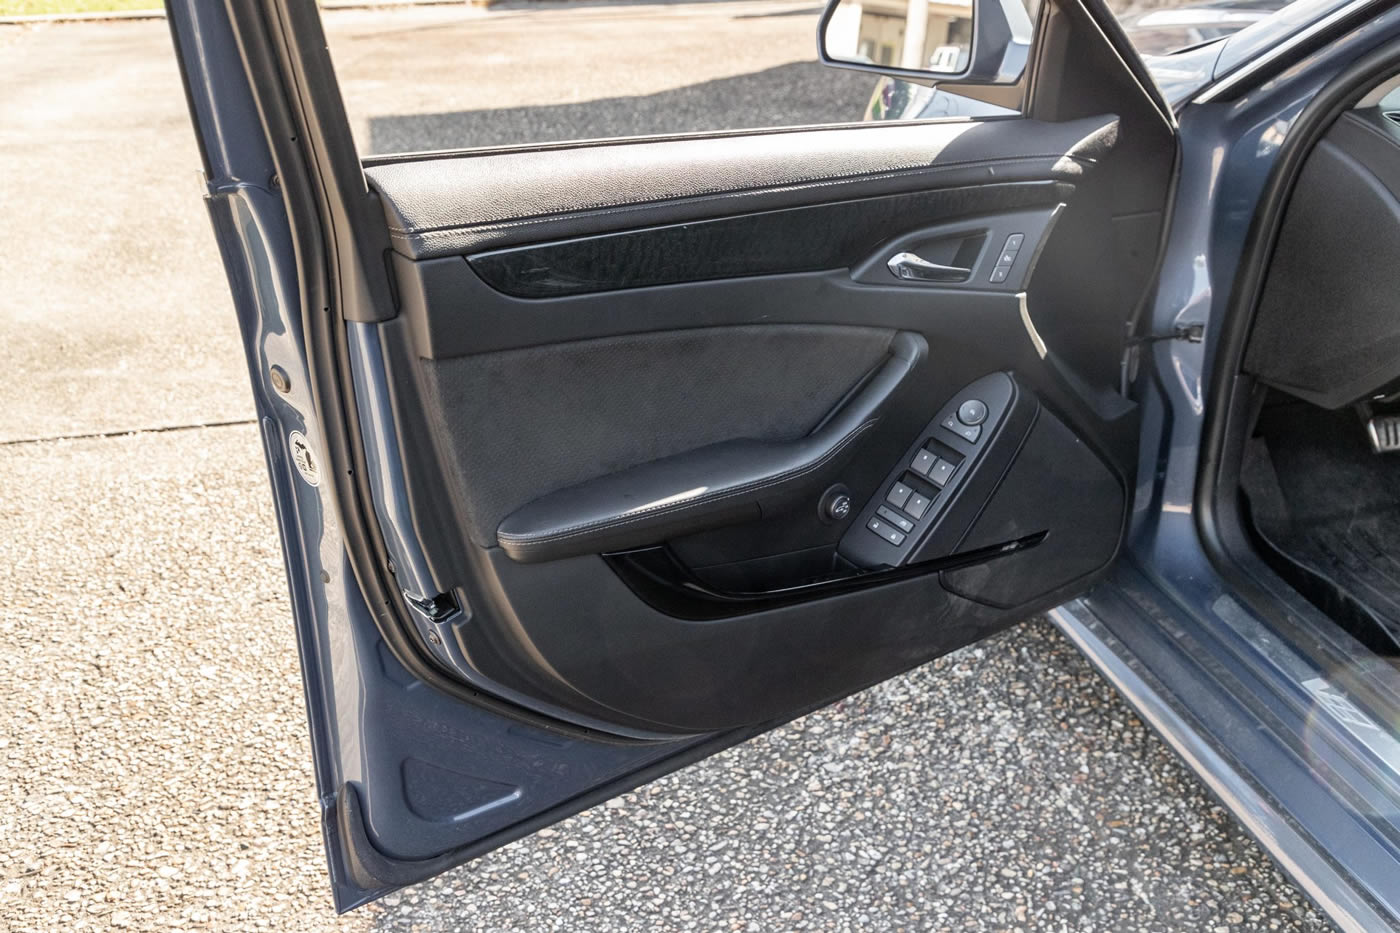 2013 Cadillac CTS-V Wagon in Stealth Blue Metallic